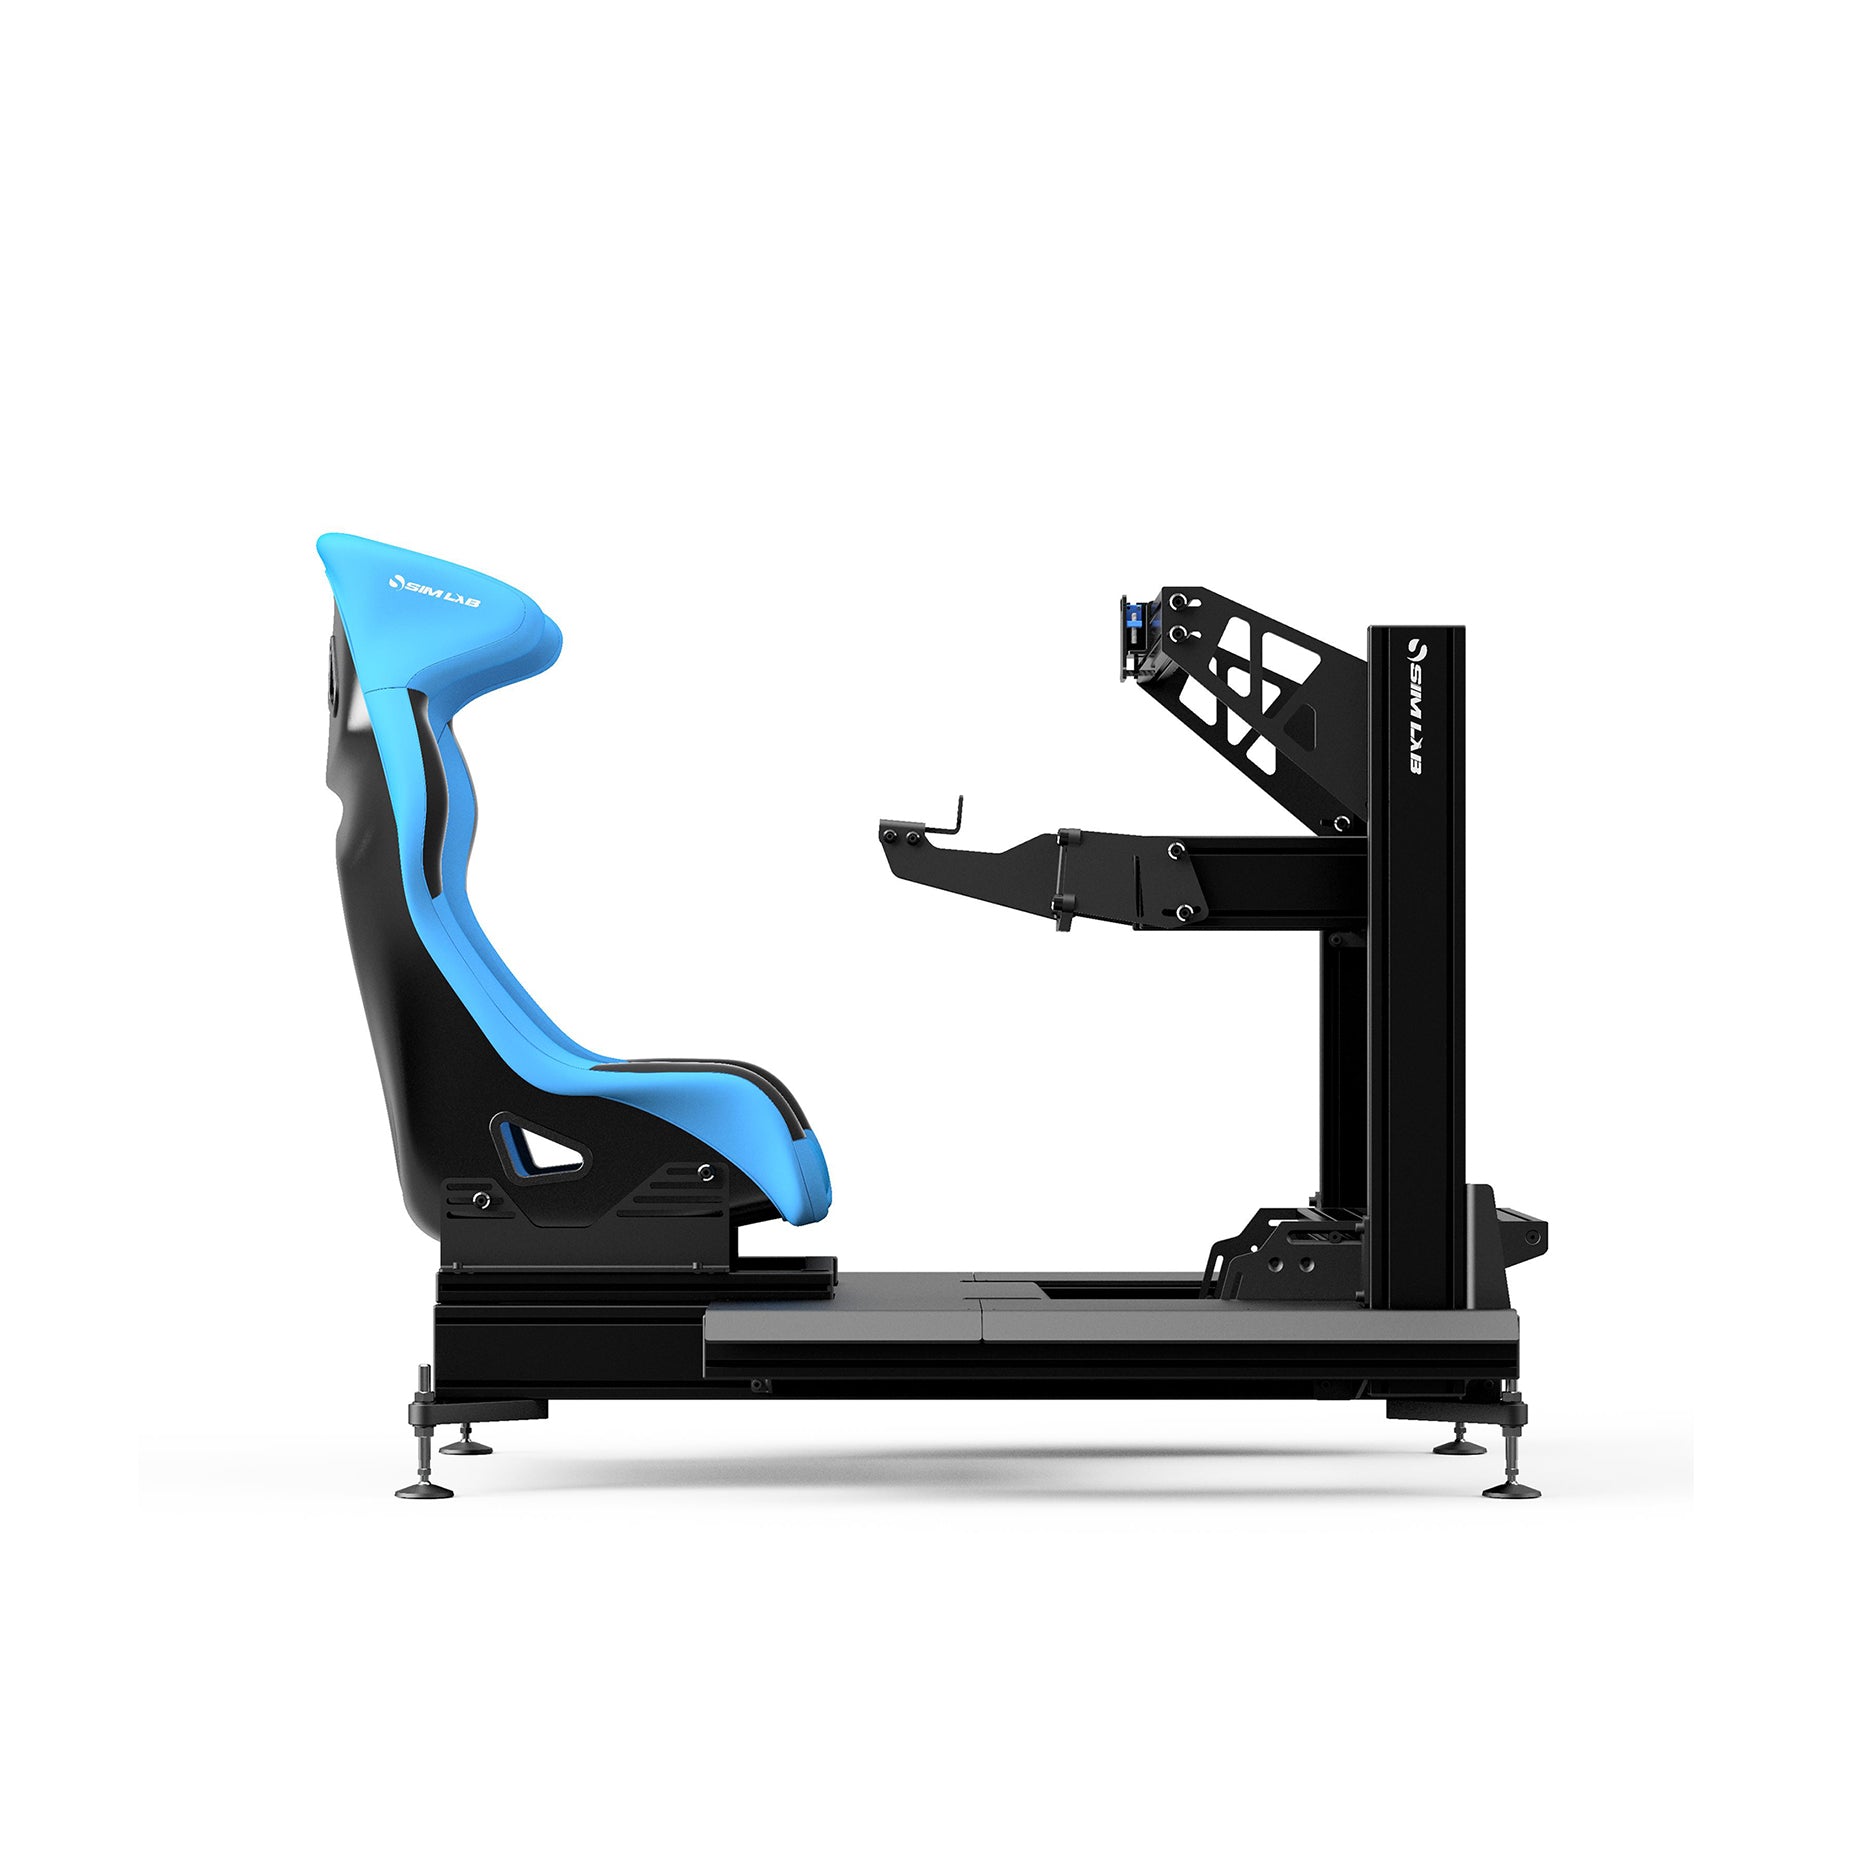 STL file Standard Simracing Cockpit - AC 🚗・3D printing template